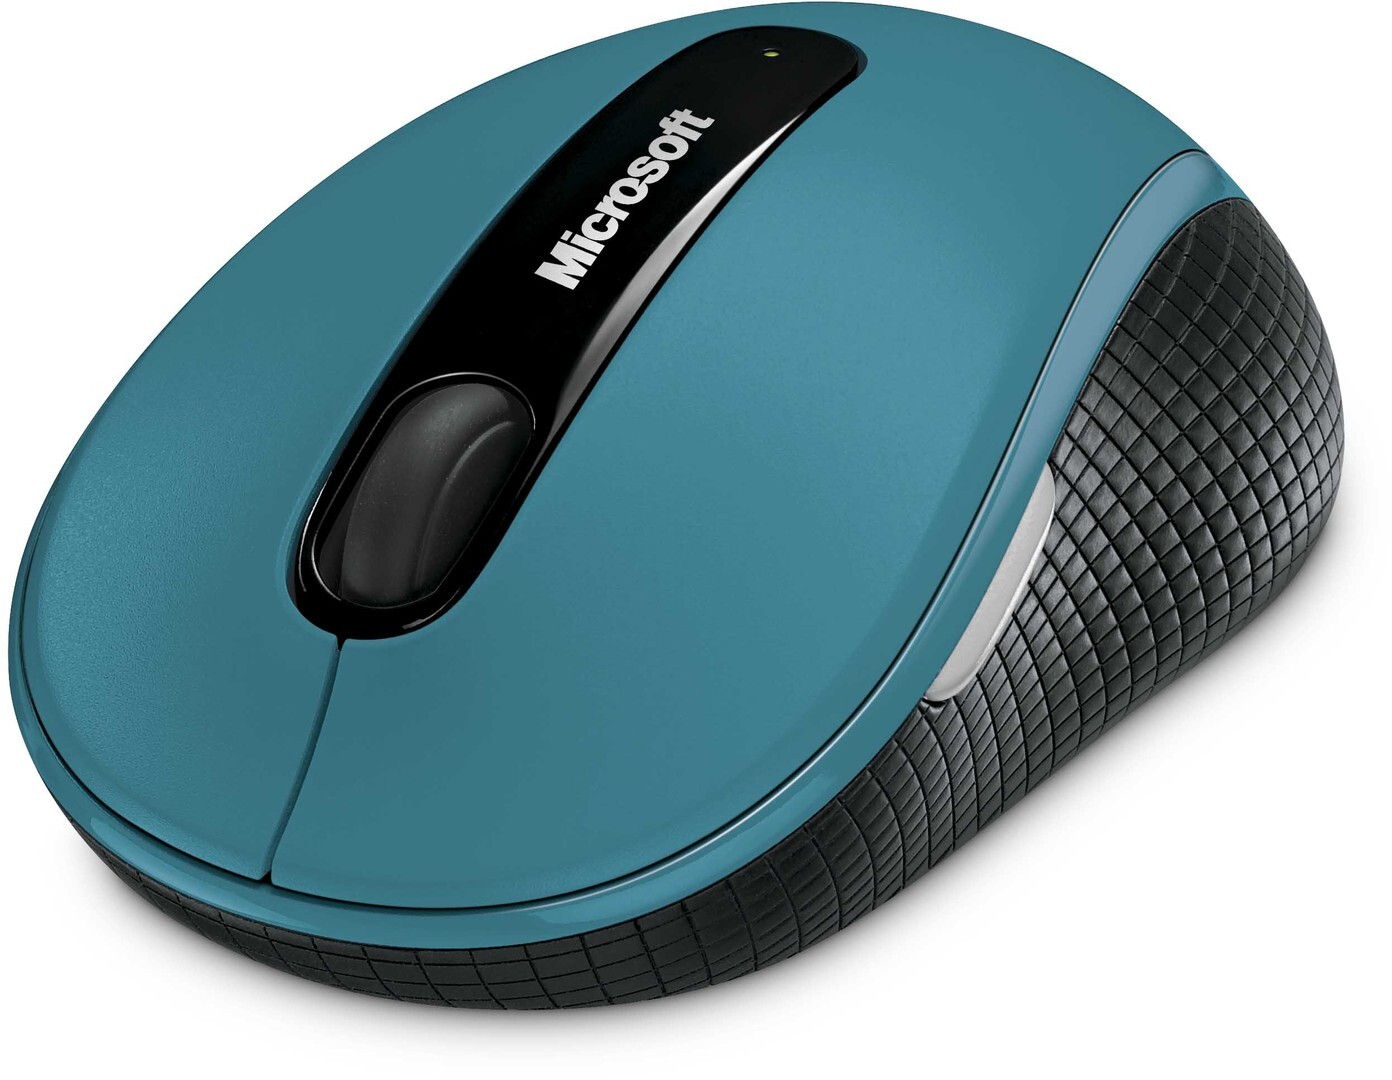 Chuột máy tính Microsoft Wireless Mobile Mouse 4000